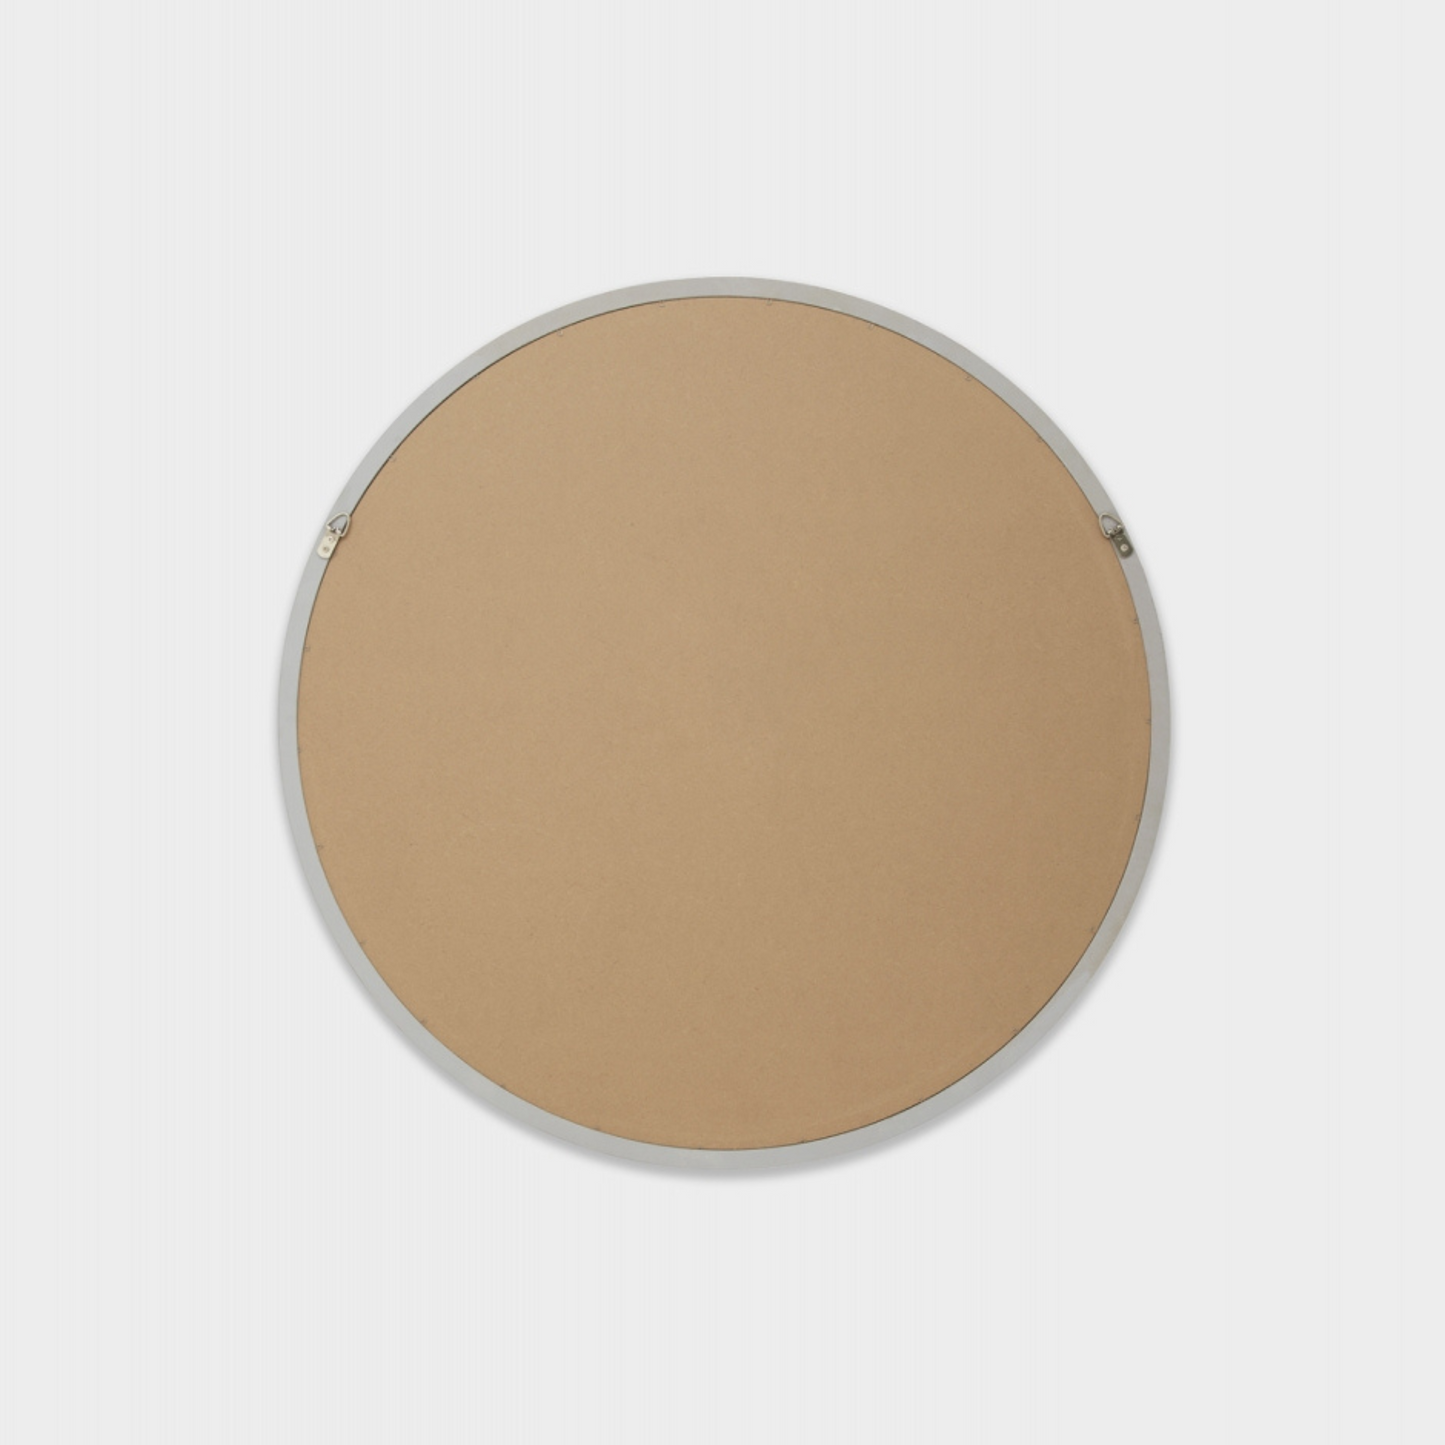 Adel Round Mirror - White 100cm